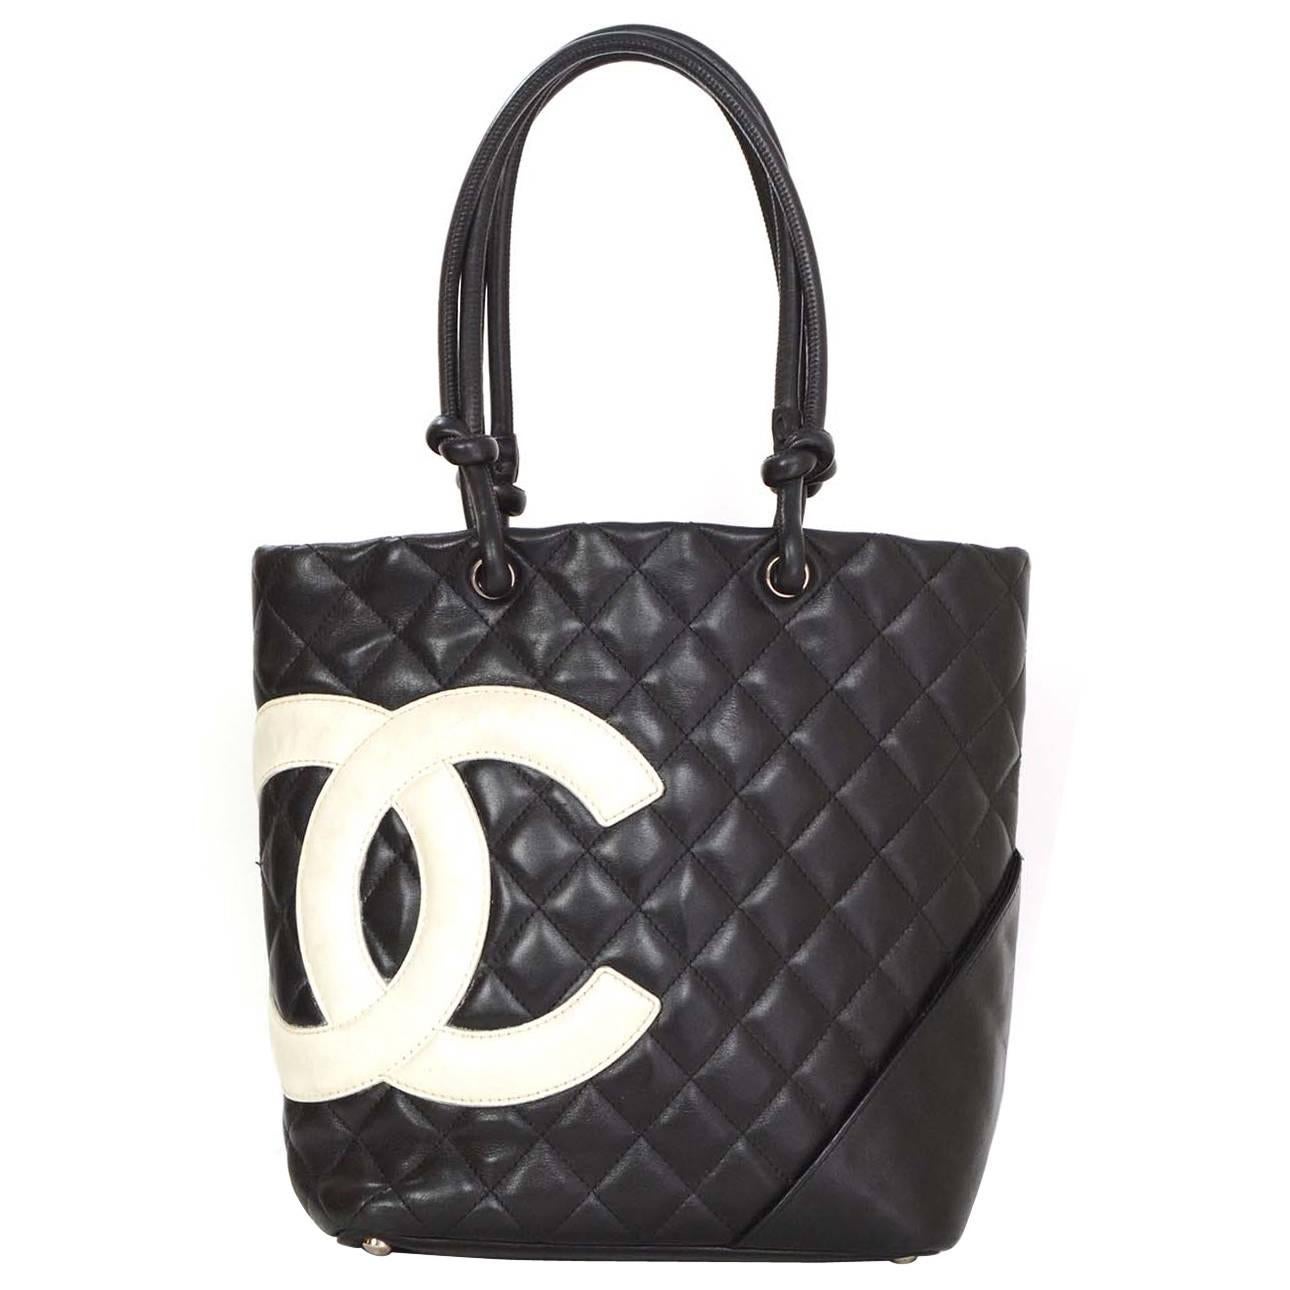 Chanel Black & White Leather Cambon Tote Bag SHW